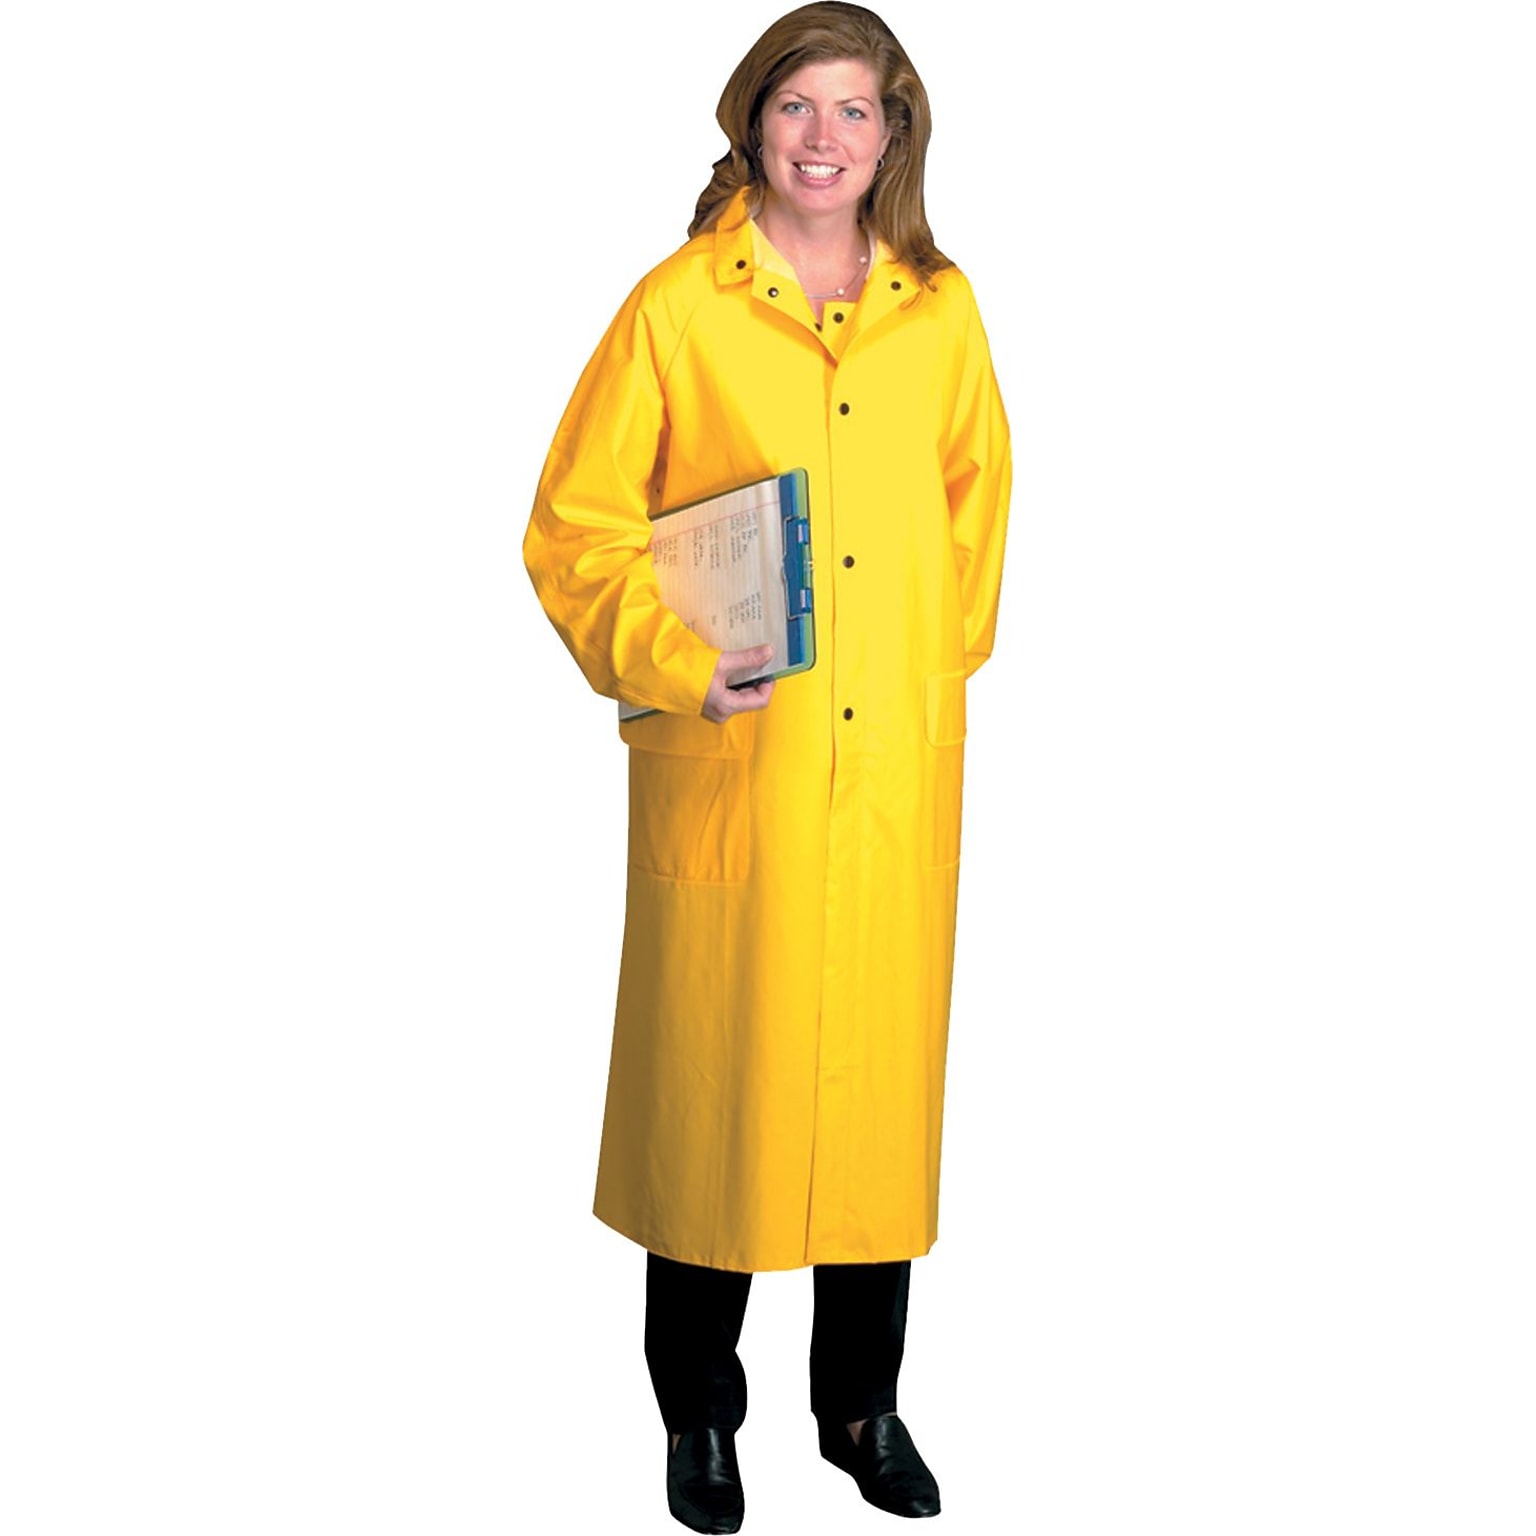 Anchor Brand Raincoats, PVC/Polyester, 2XL Size, Snap Front Closure, Yellow, 2-Pockets